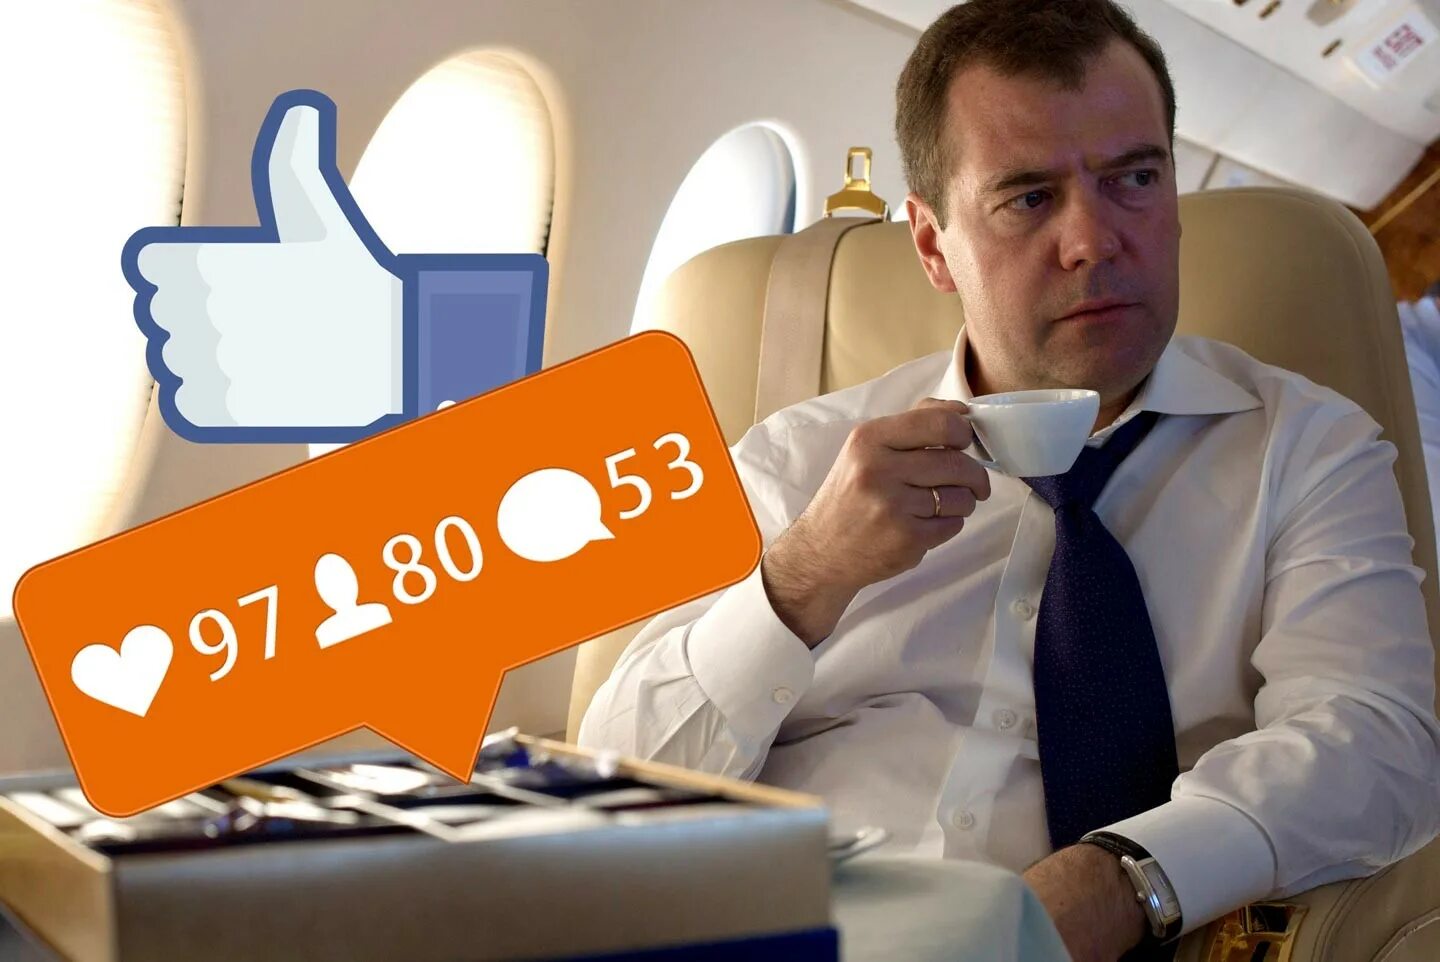 Руссиано. Медведев русиано. Медведев с кофе. Кофе от Медведева.